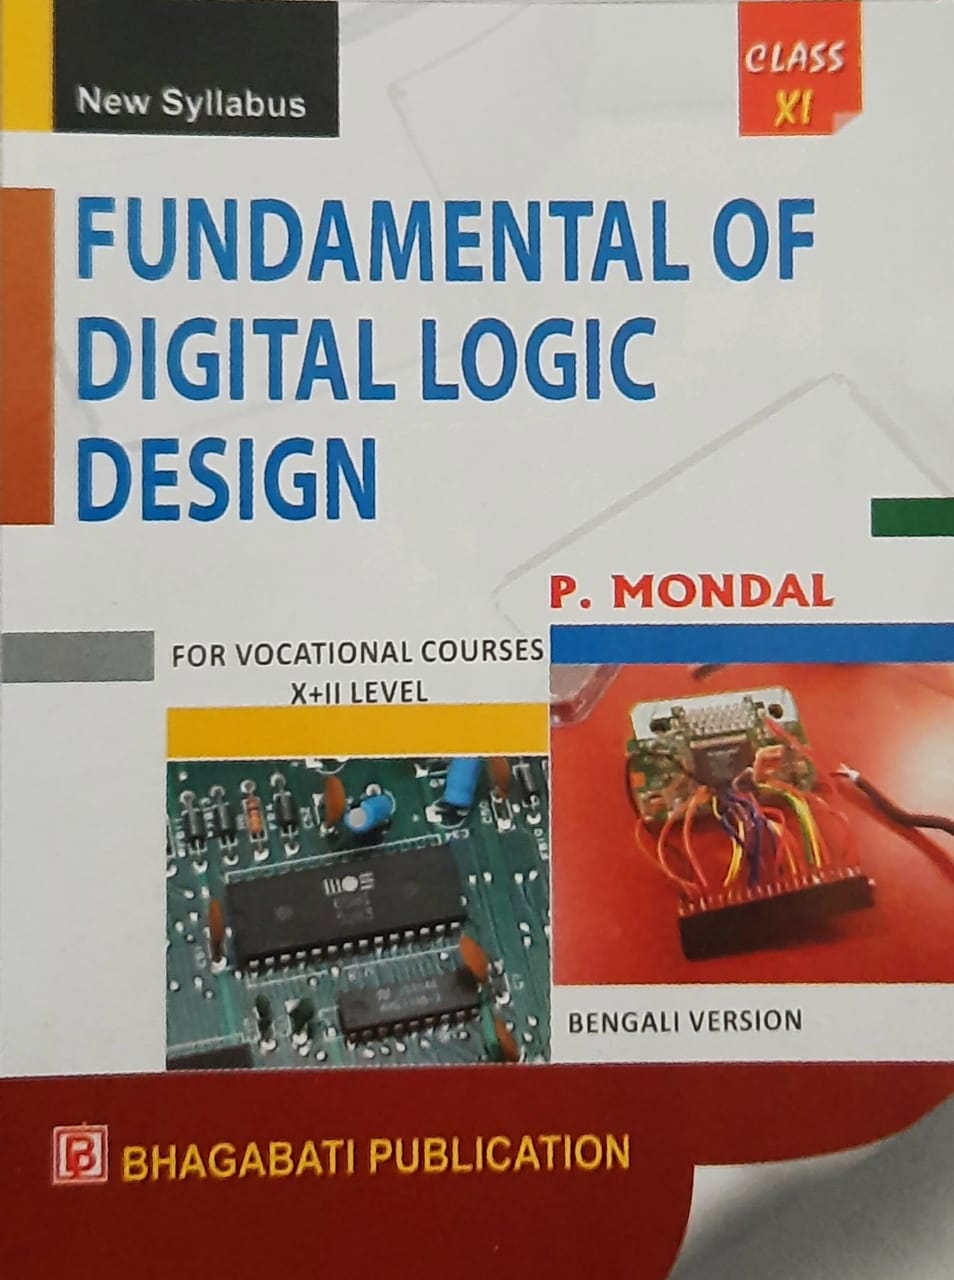 Fundamental of Digital Logic Design P MONDAL